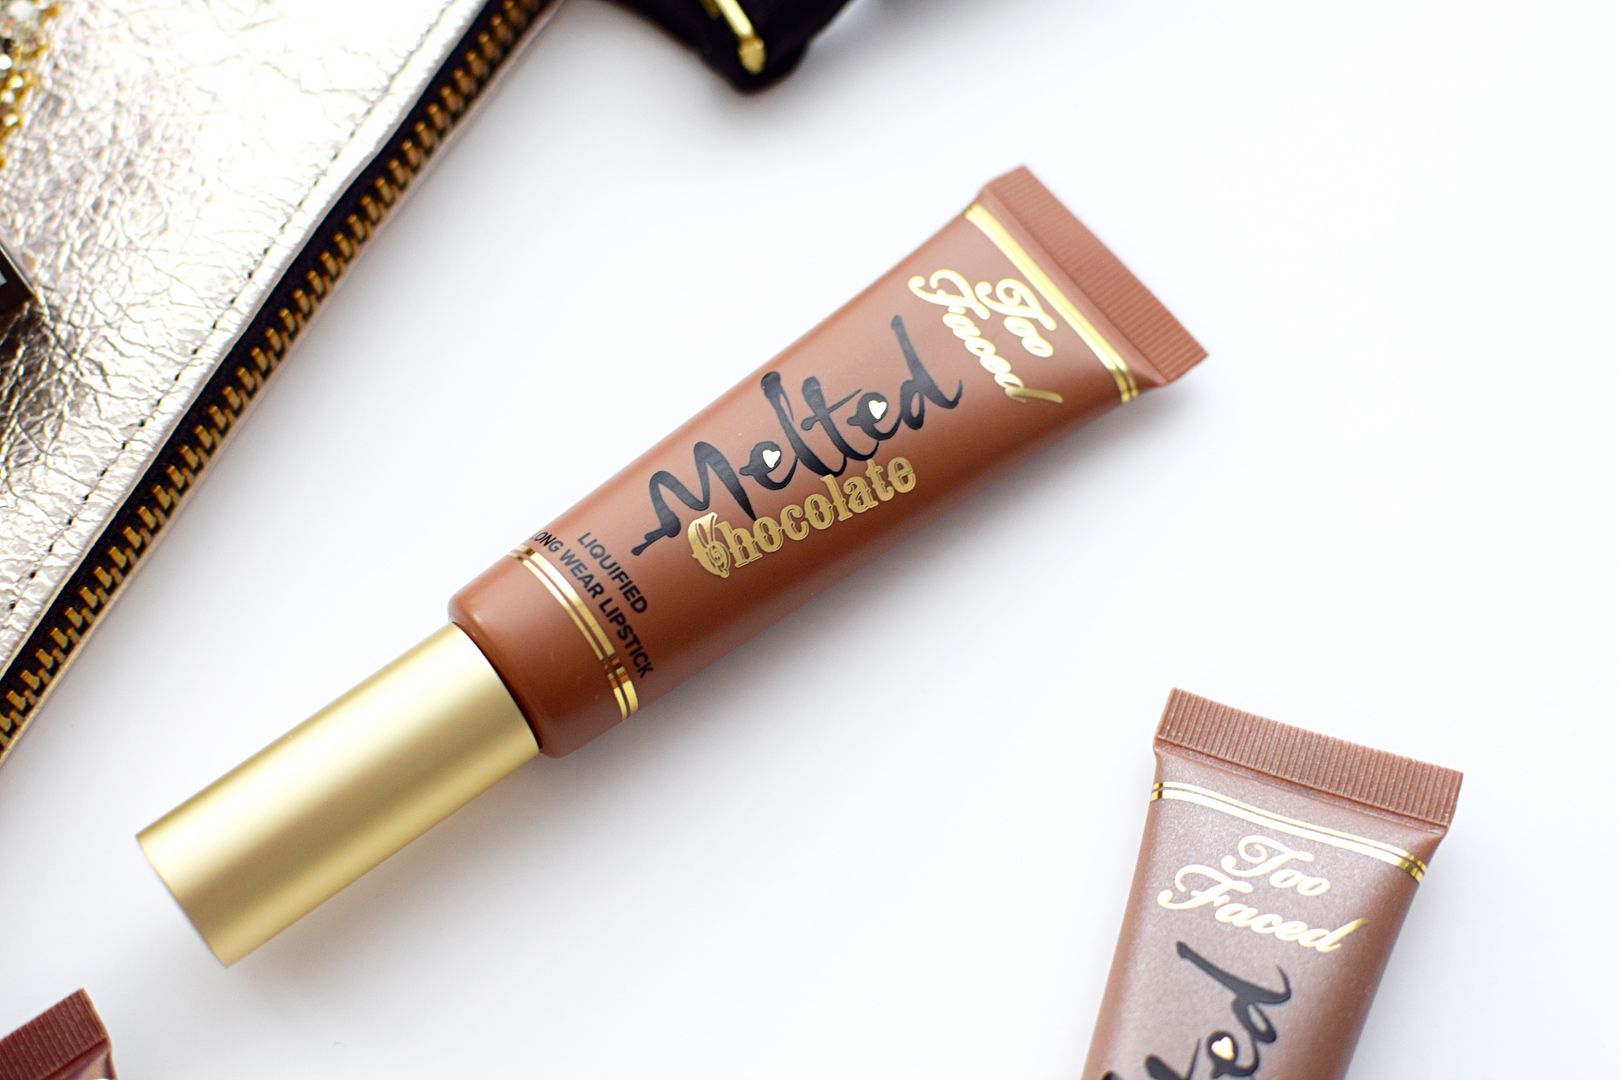 Too Faced Melted Chocolate Liquid Lipstick Chocolate Honey - UK Beauty Blog